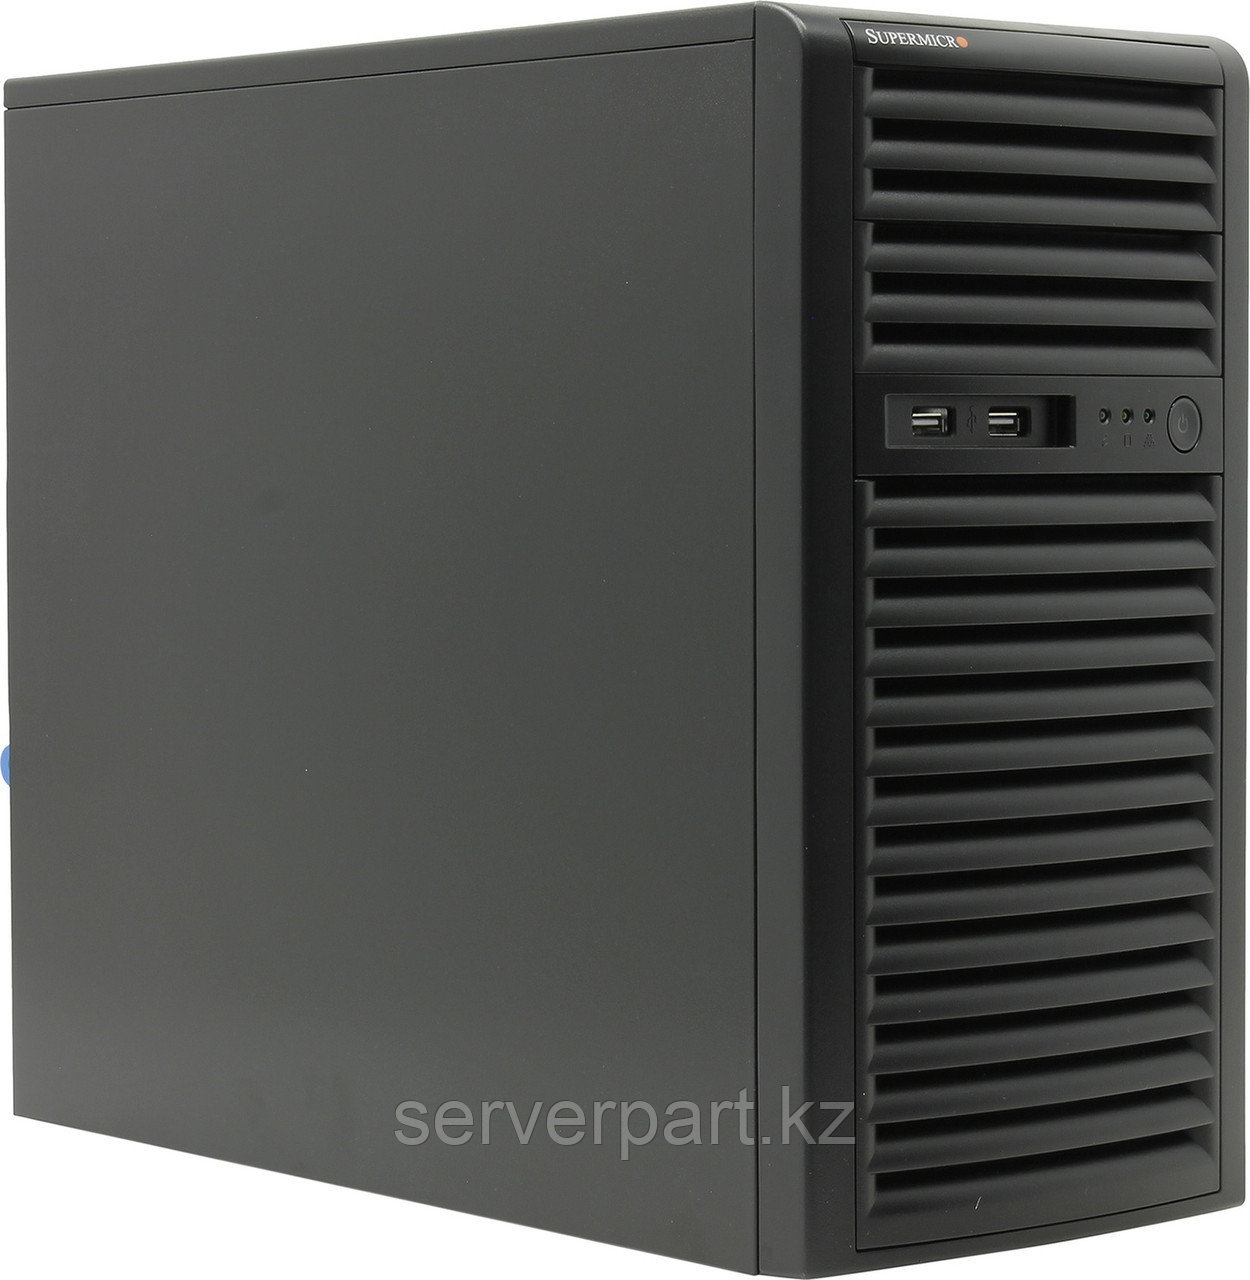 Сервер Supermicro SYS-5039C Tower 4LFF/4-core intel xeon E2124 3.3GHz/32GB EUDIMM/1x960GB SSD RI Hyb, фото 1